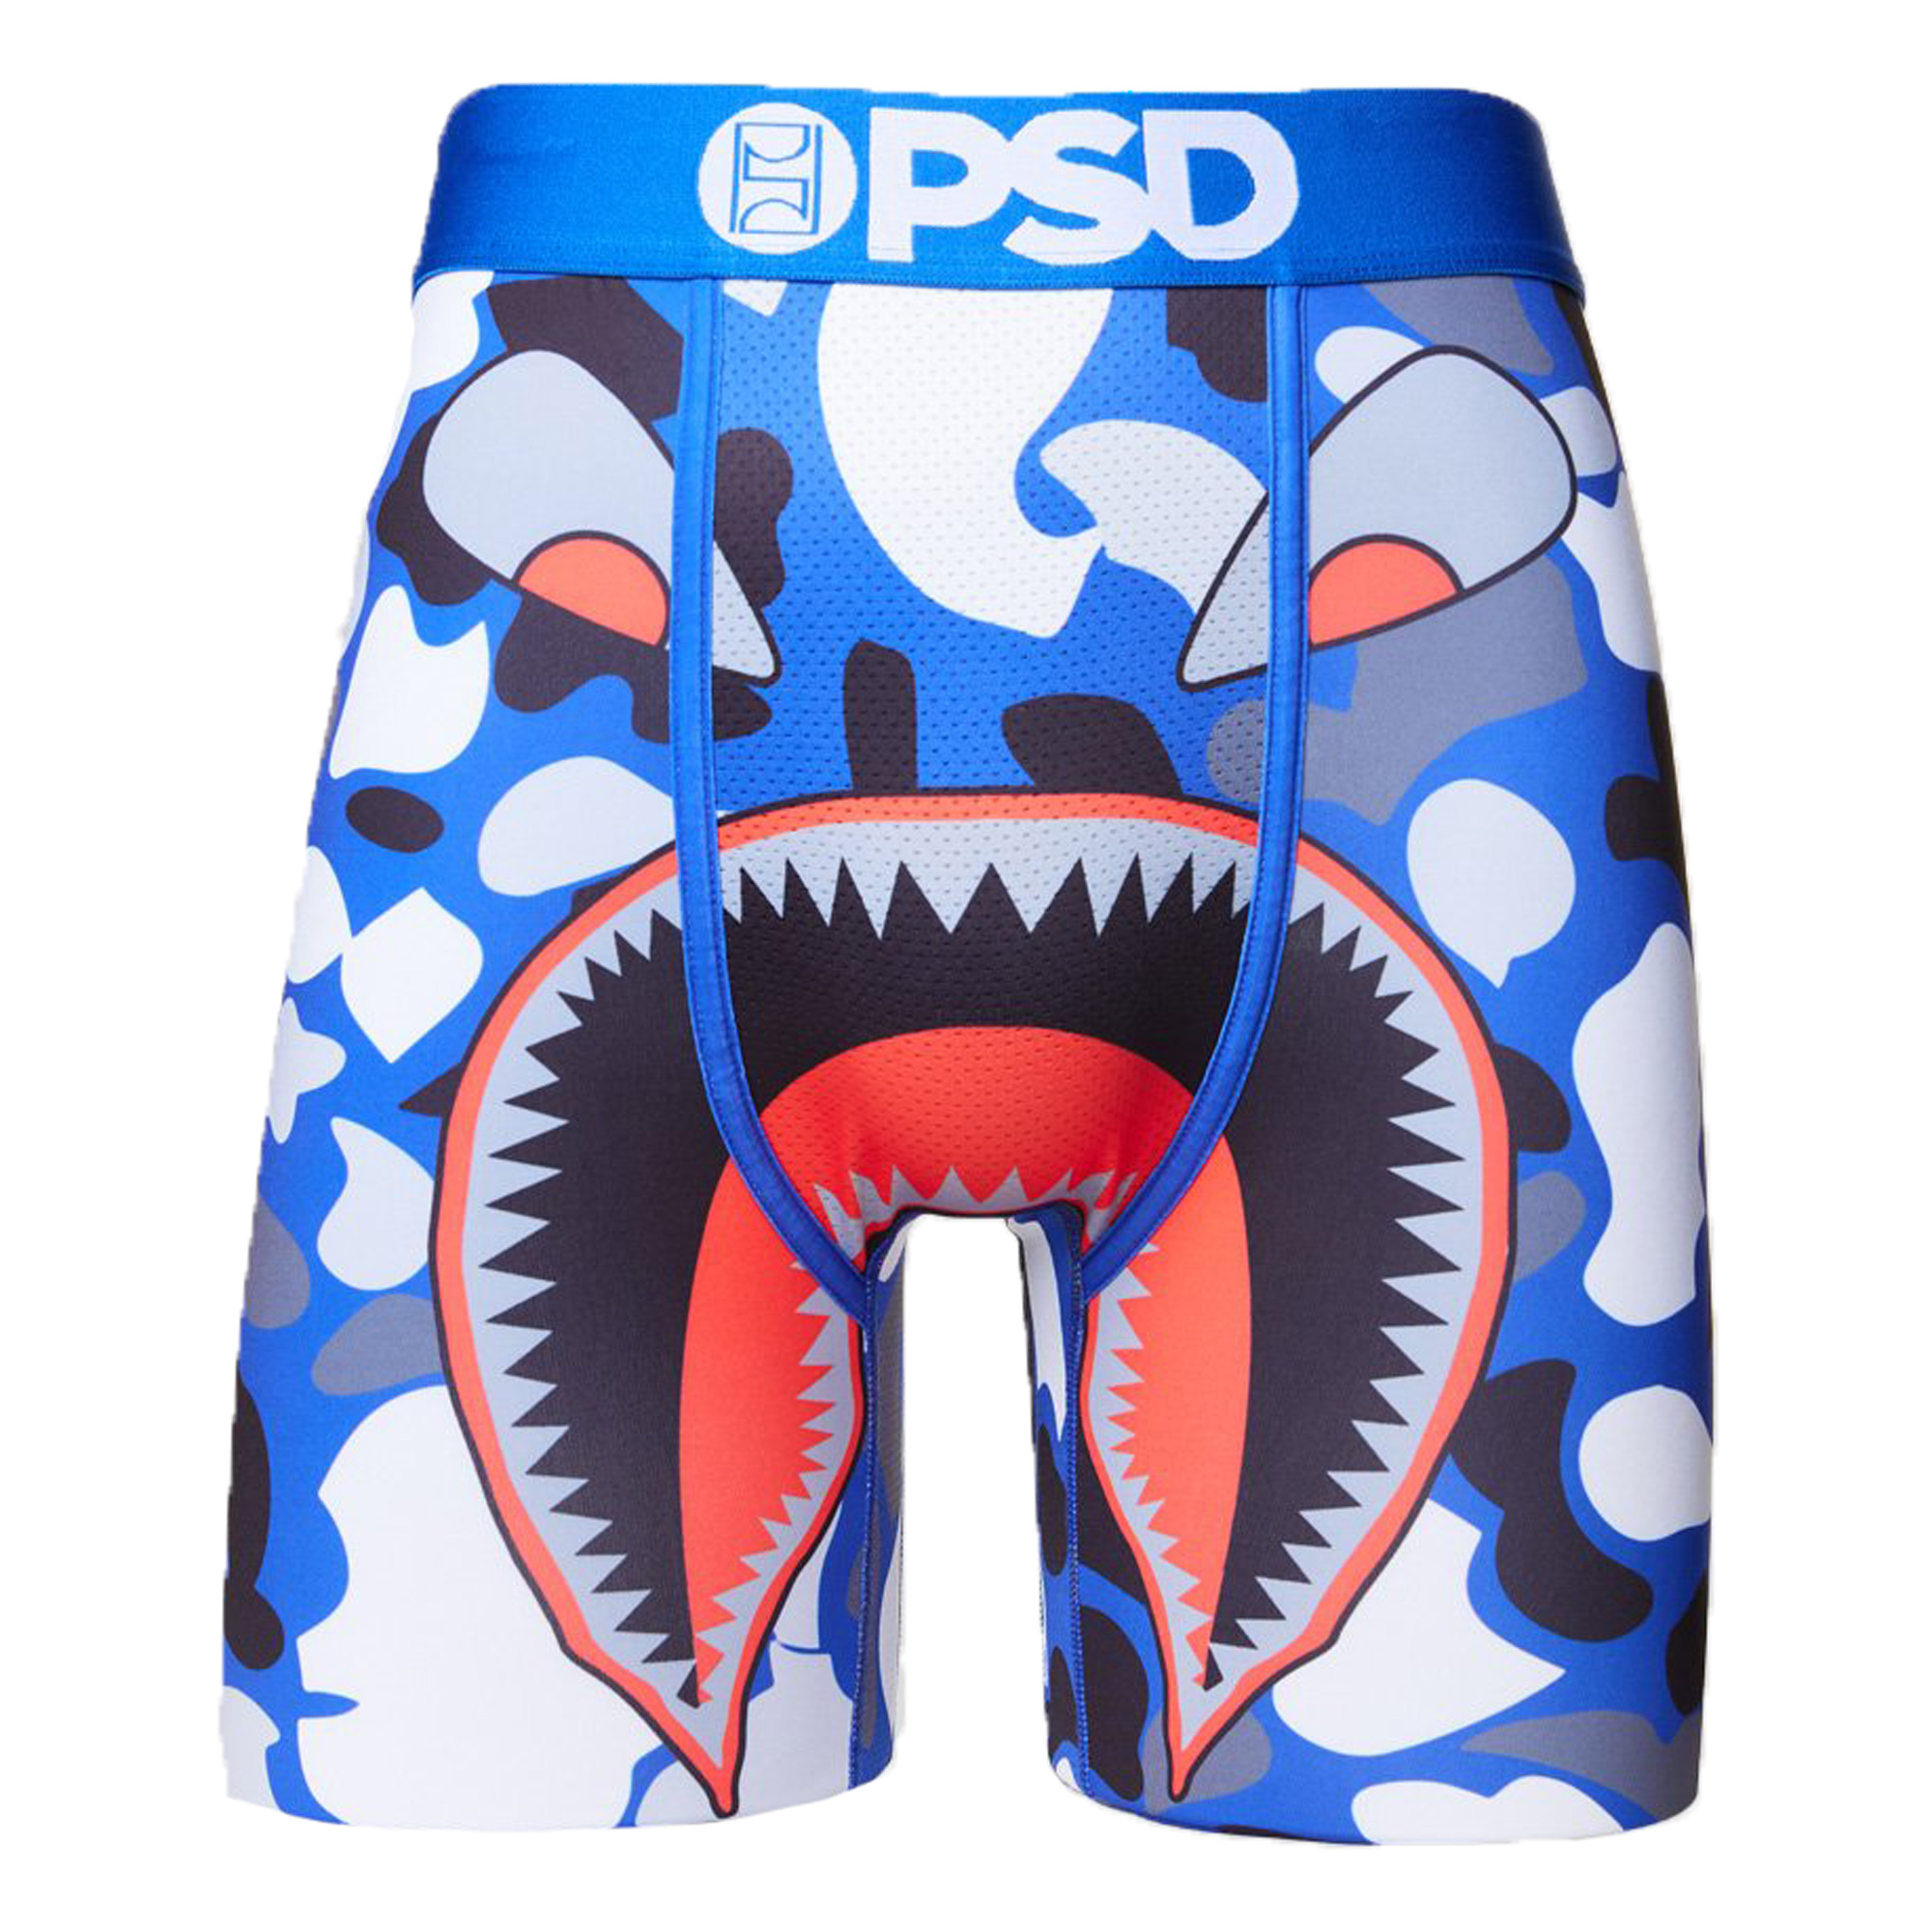 PSD Warface Boxer Briefs Blue/Red Camo Shark Bite Underwear 121180009 Size  Large